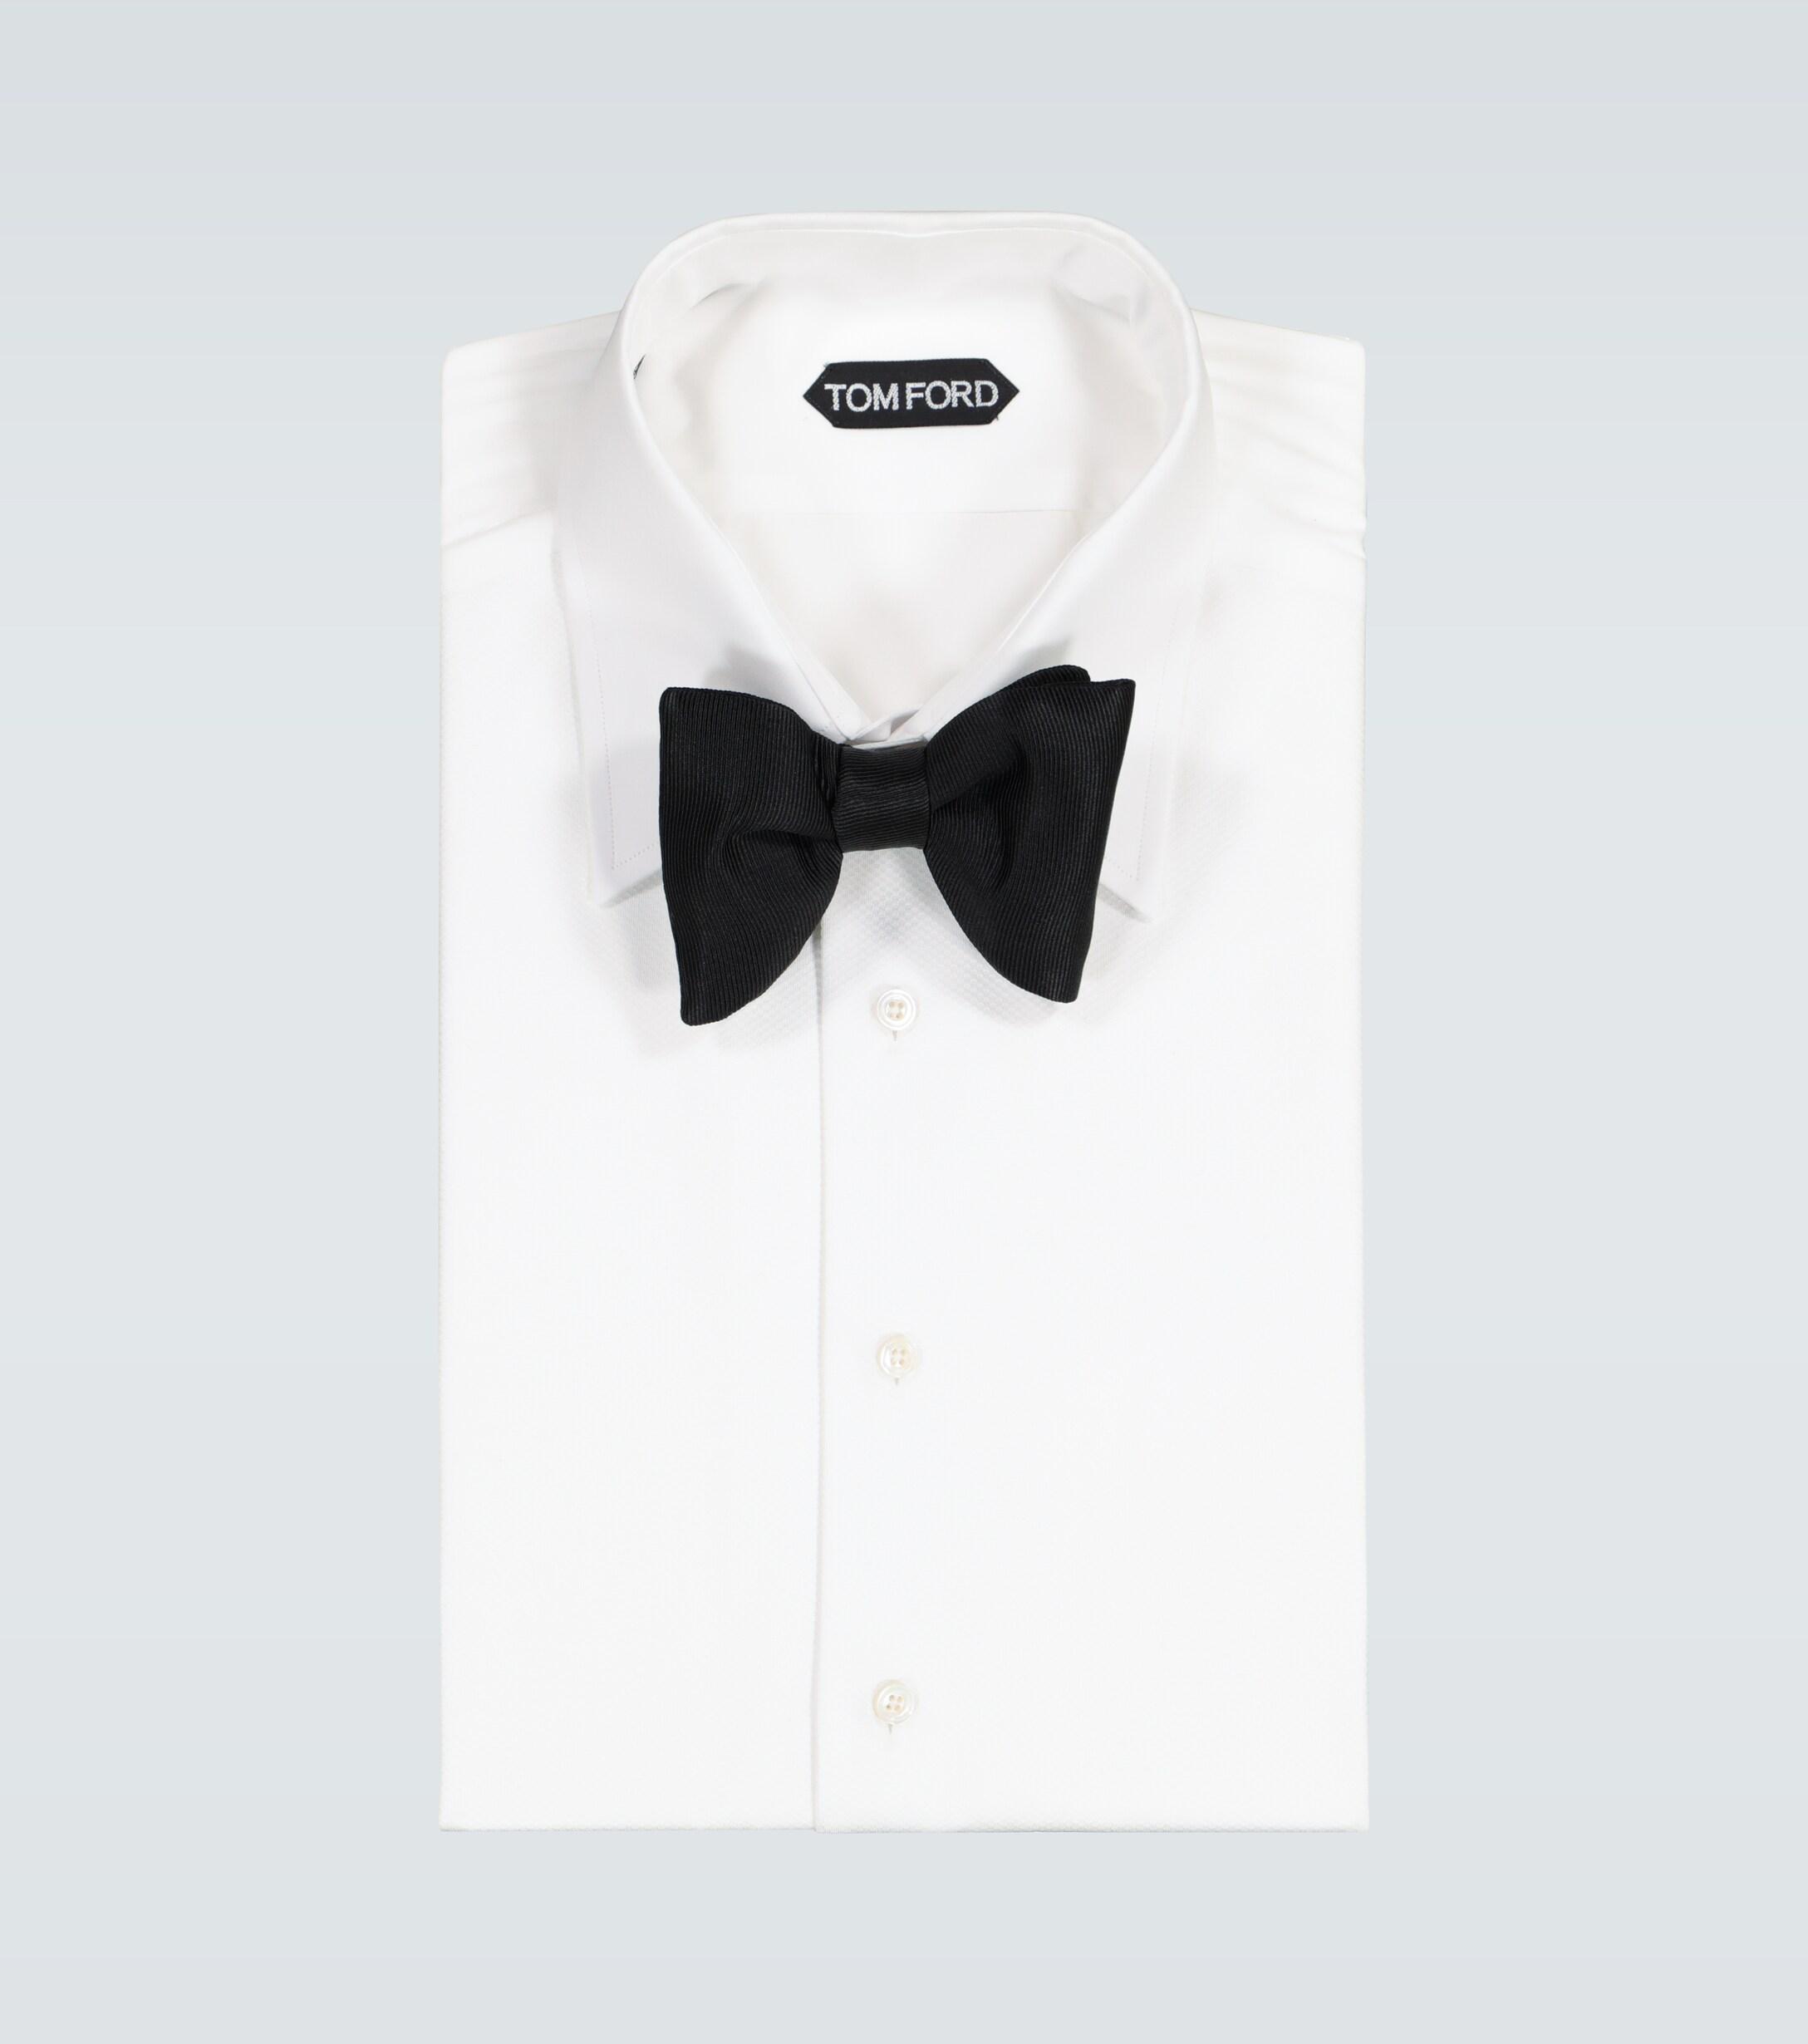 Tom Ford Silk Grosgrain Large Evening Bow Tie in Black for Men - Lyst